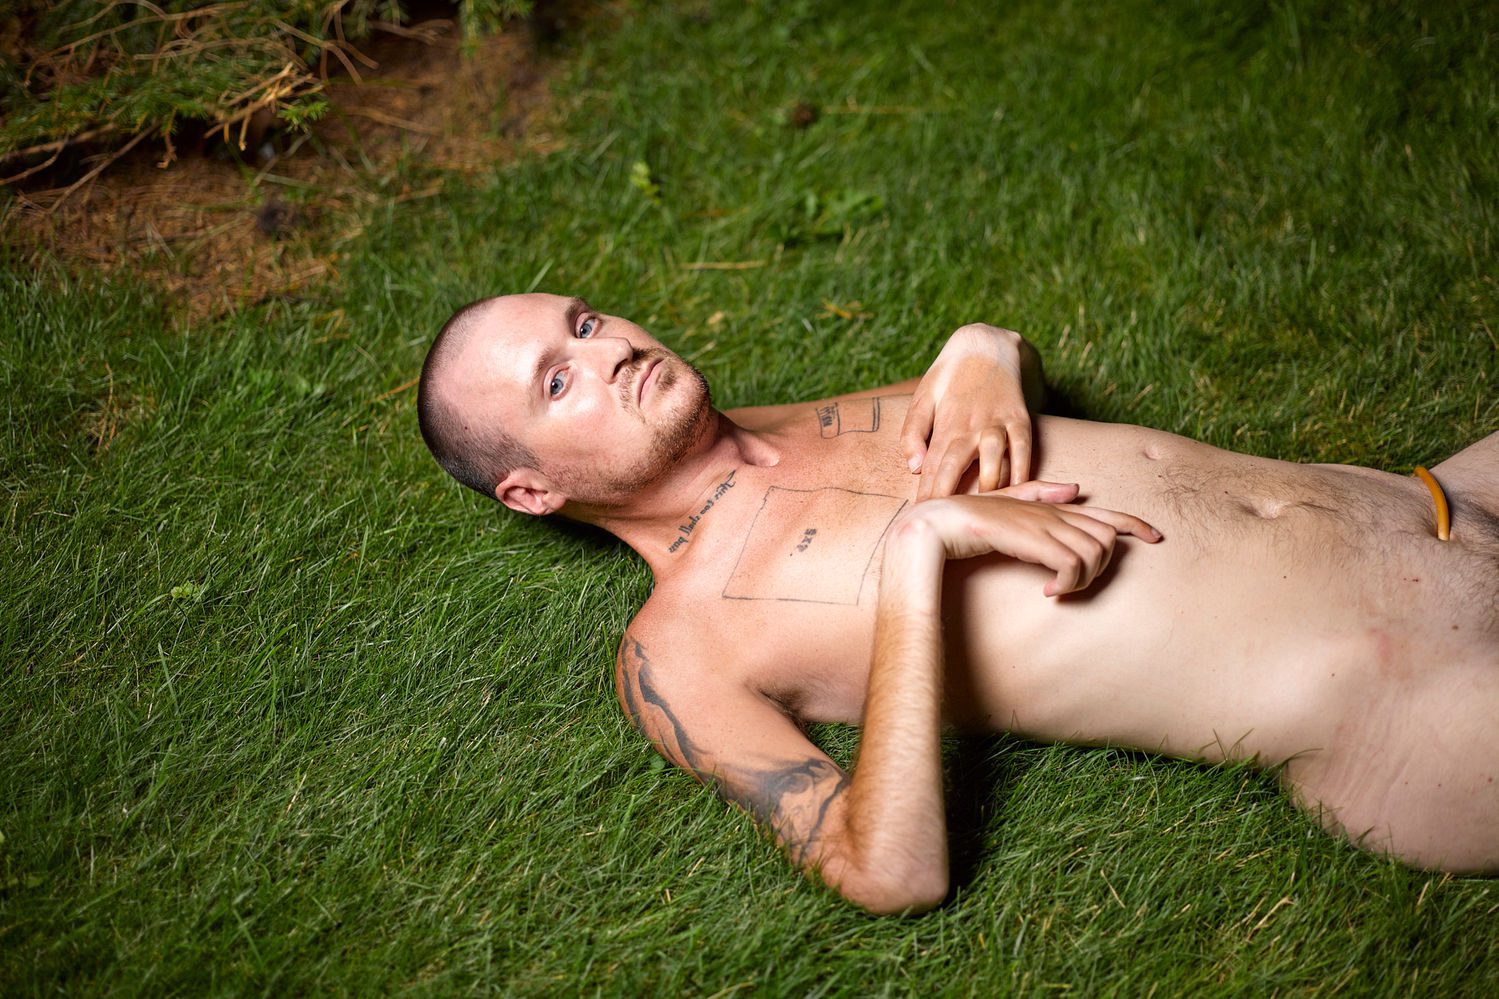 1 Robert Andt Coombs Nude on grass III